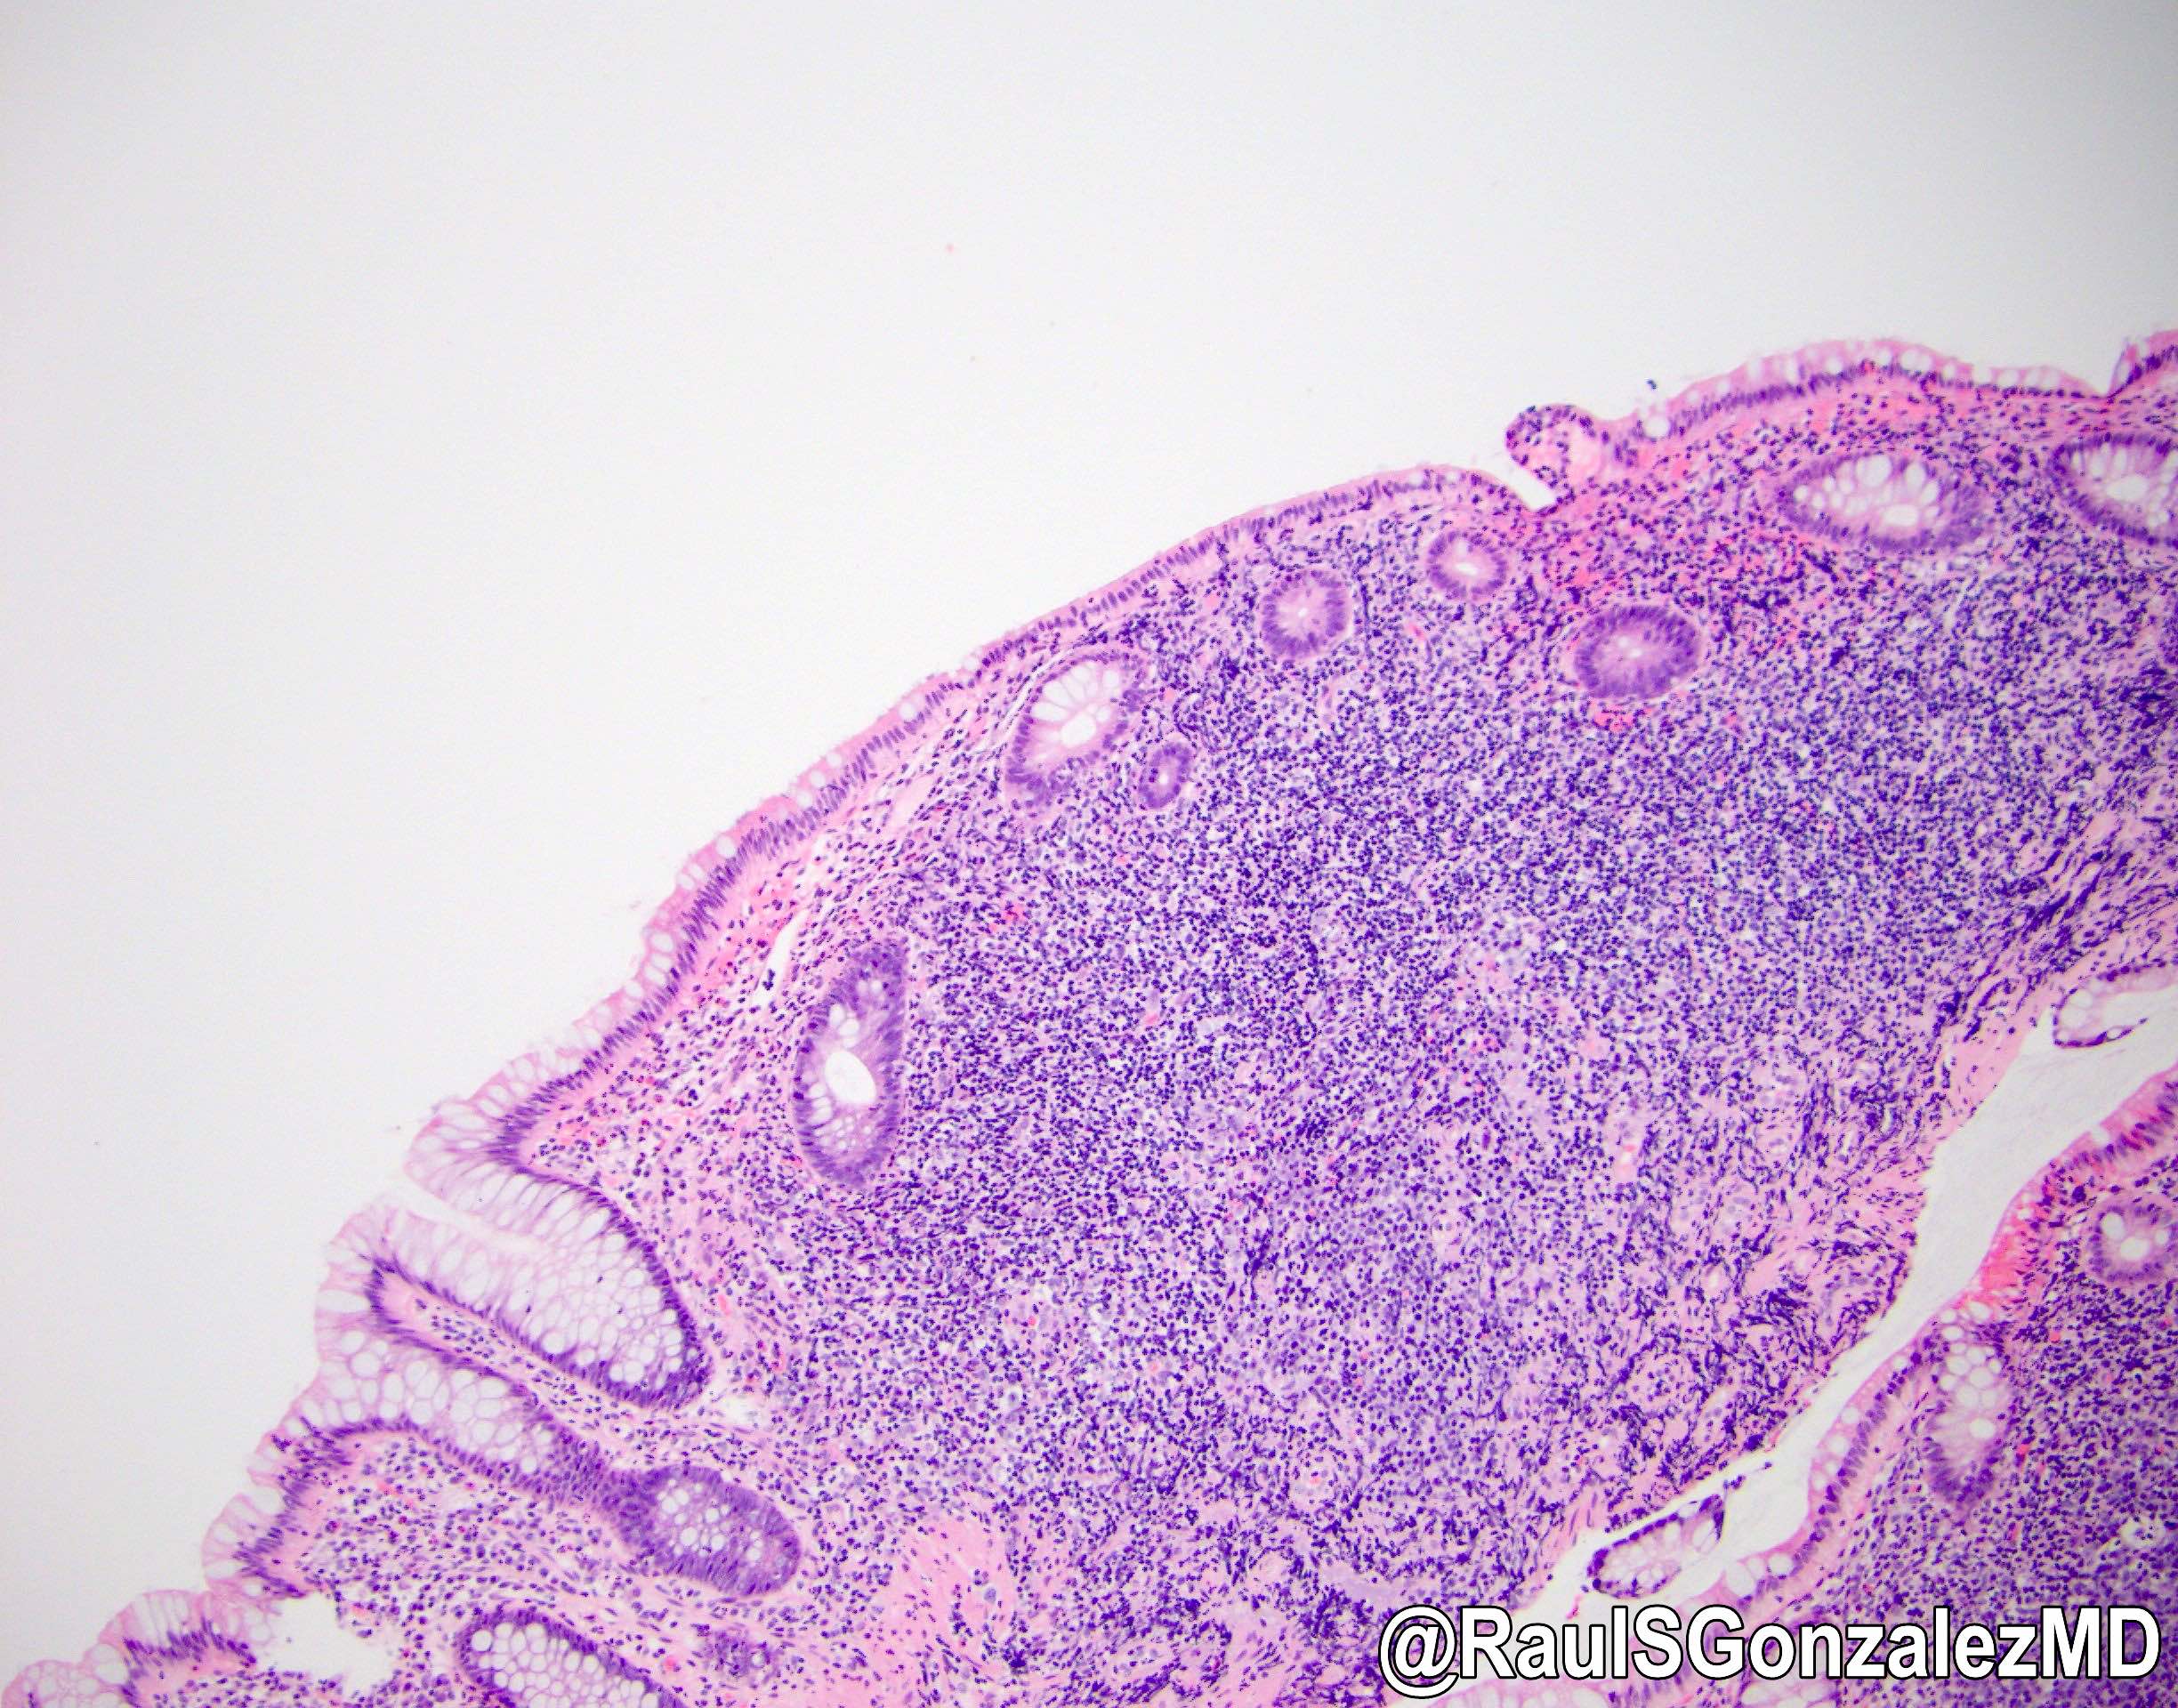 Intestinal spirochetosis